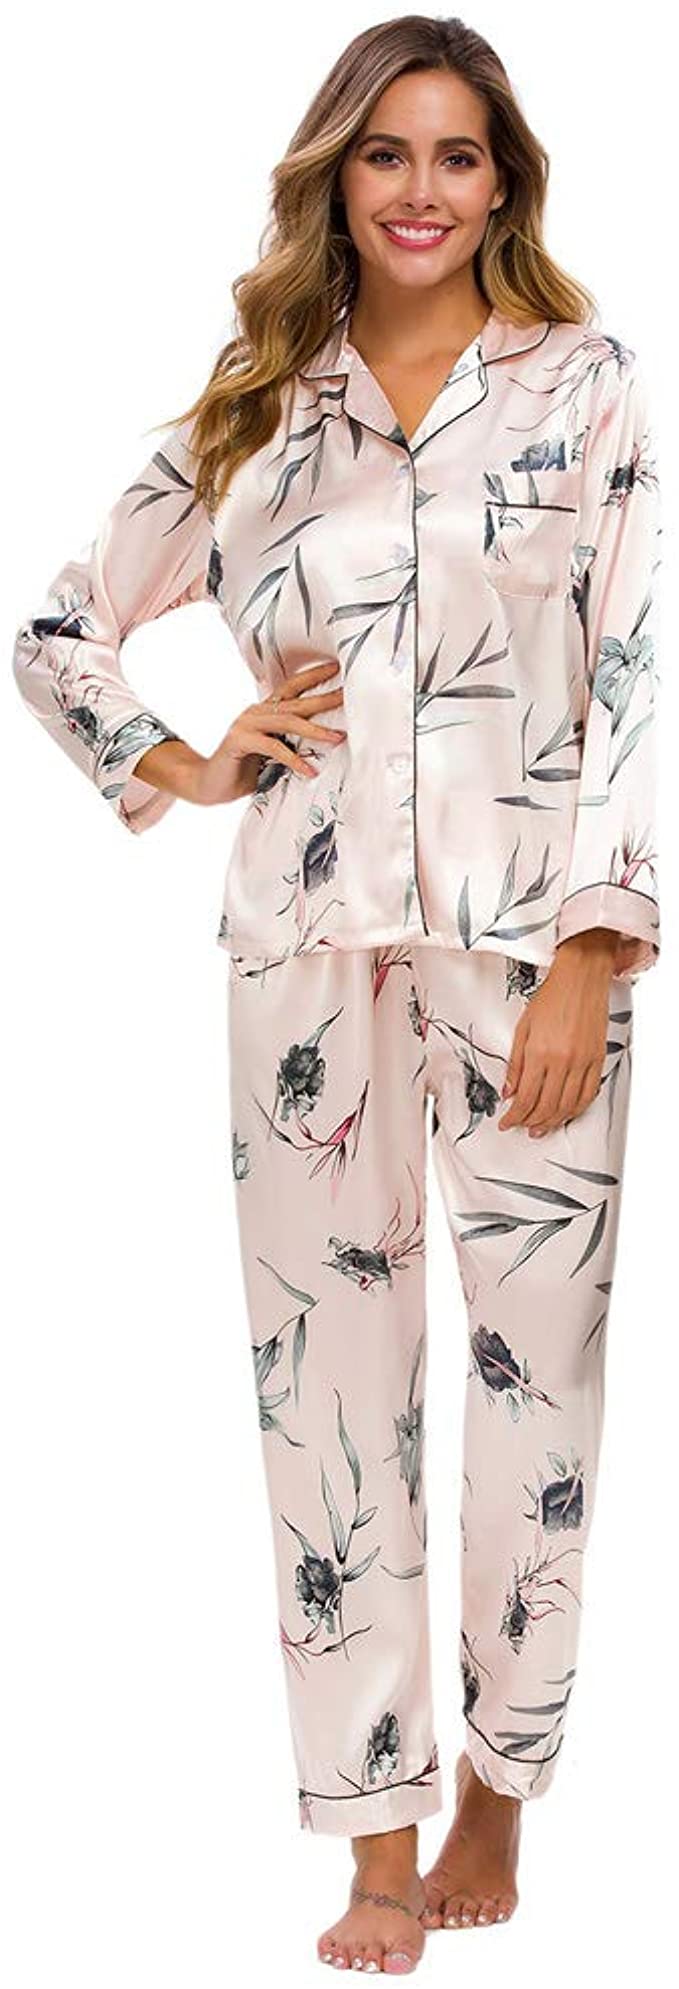 GOSO Ladies Pyjamas Set- Women Pyjamas Button Down Pjs for Women Sets Floral Long Sleeve Sleepwear Lady Nightwear Soft Lounge Sets for Ladies Pjs